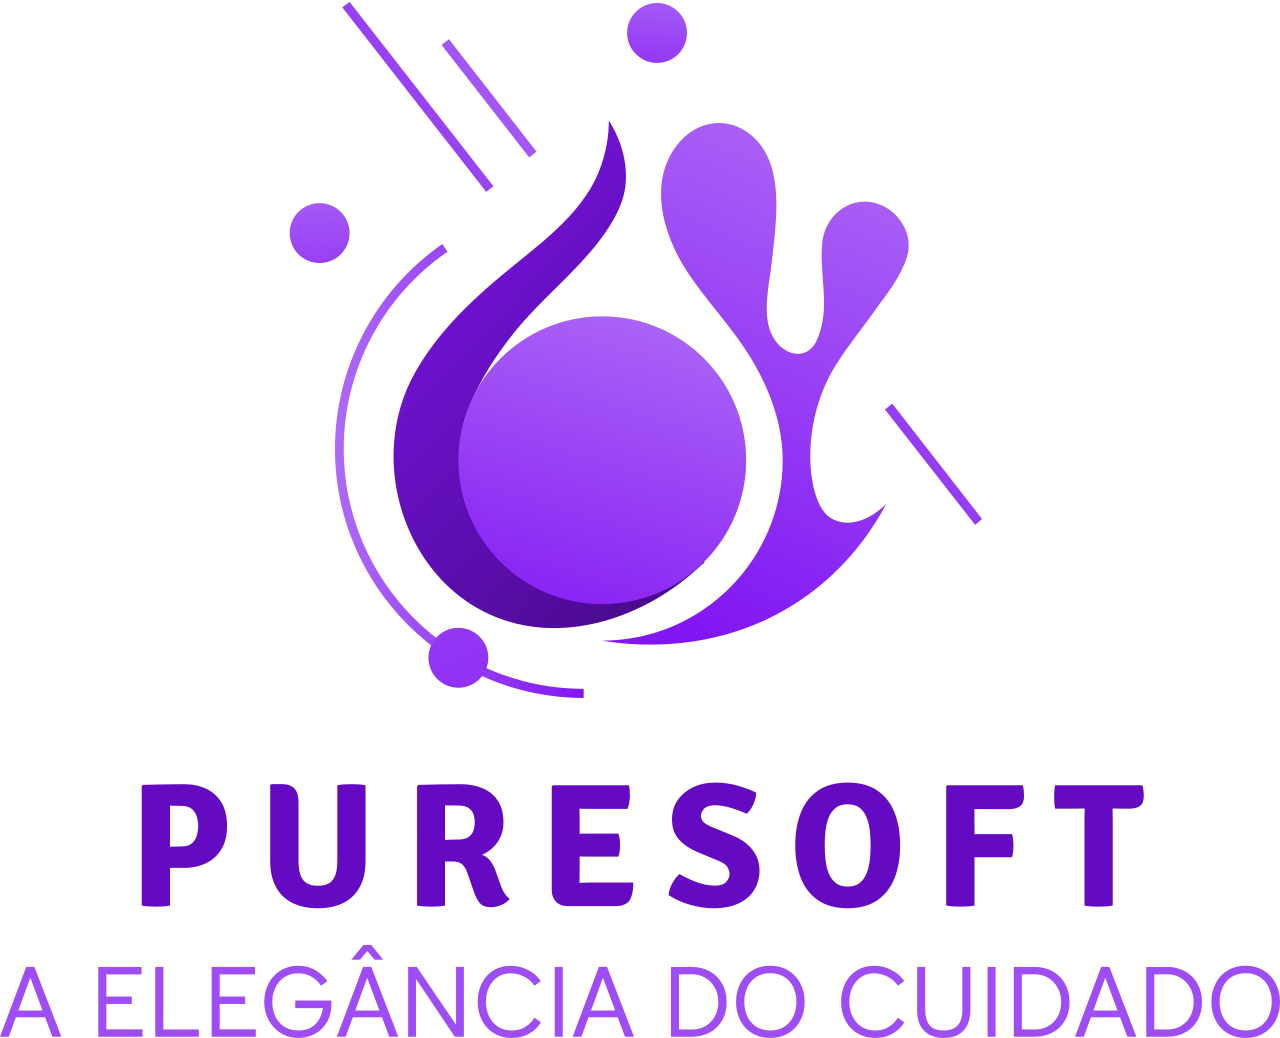 PureSoft's logo